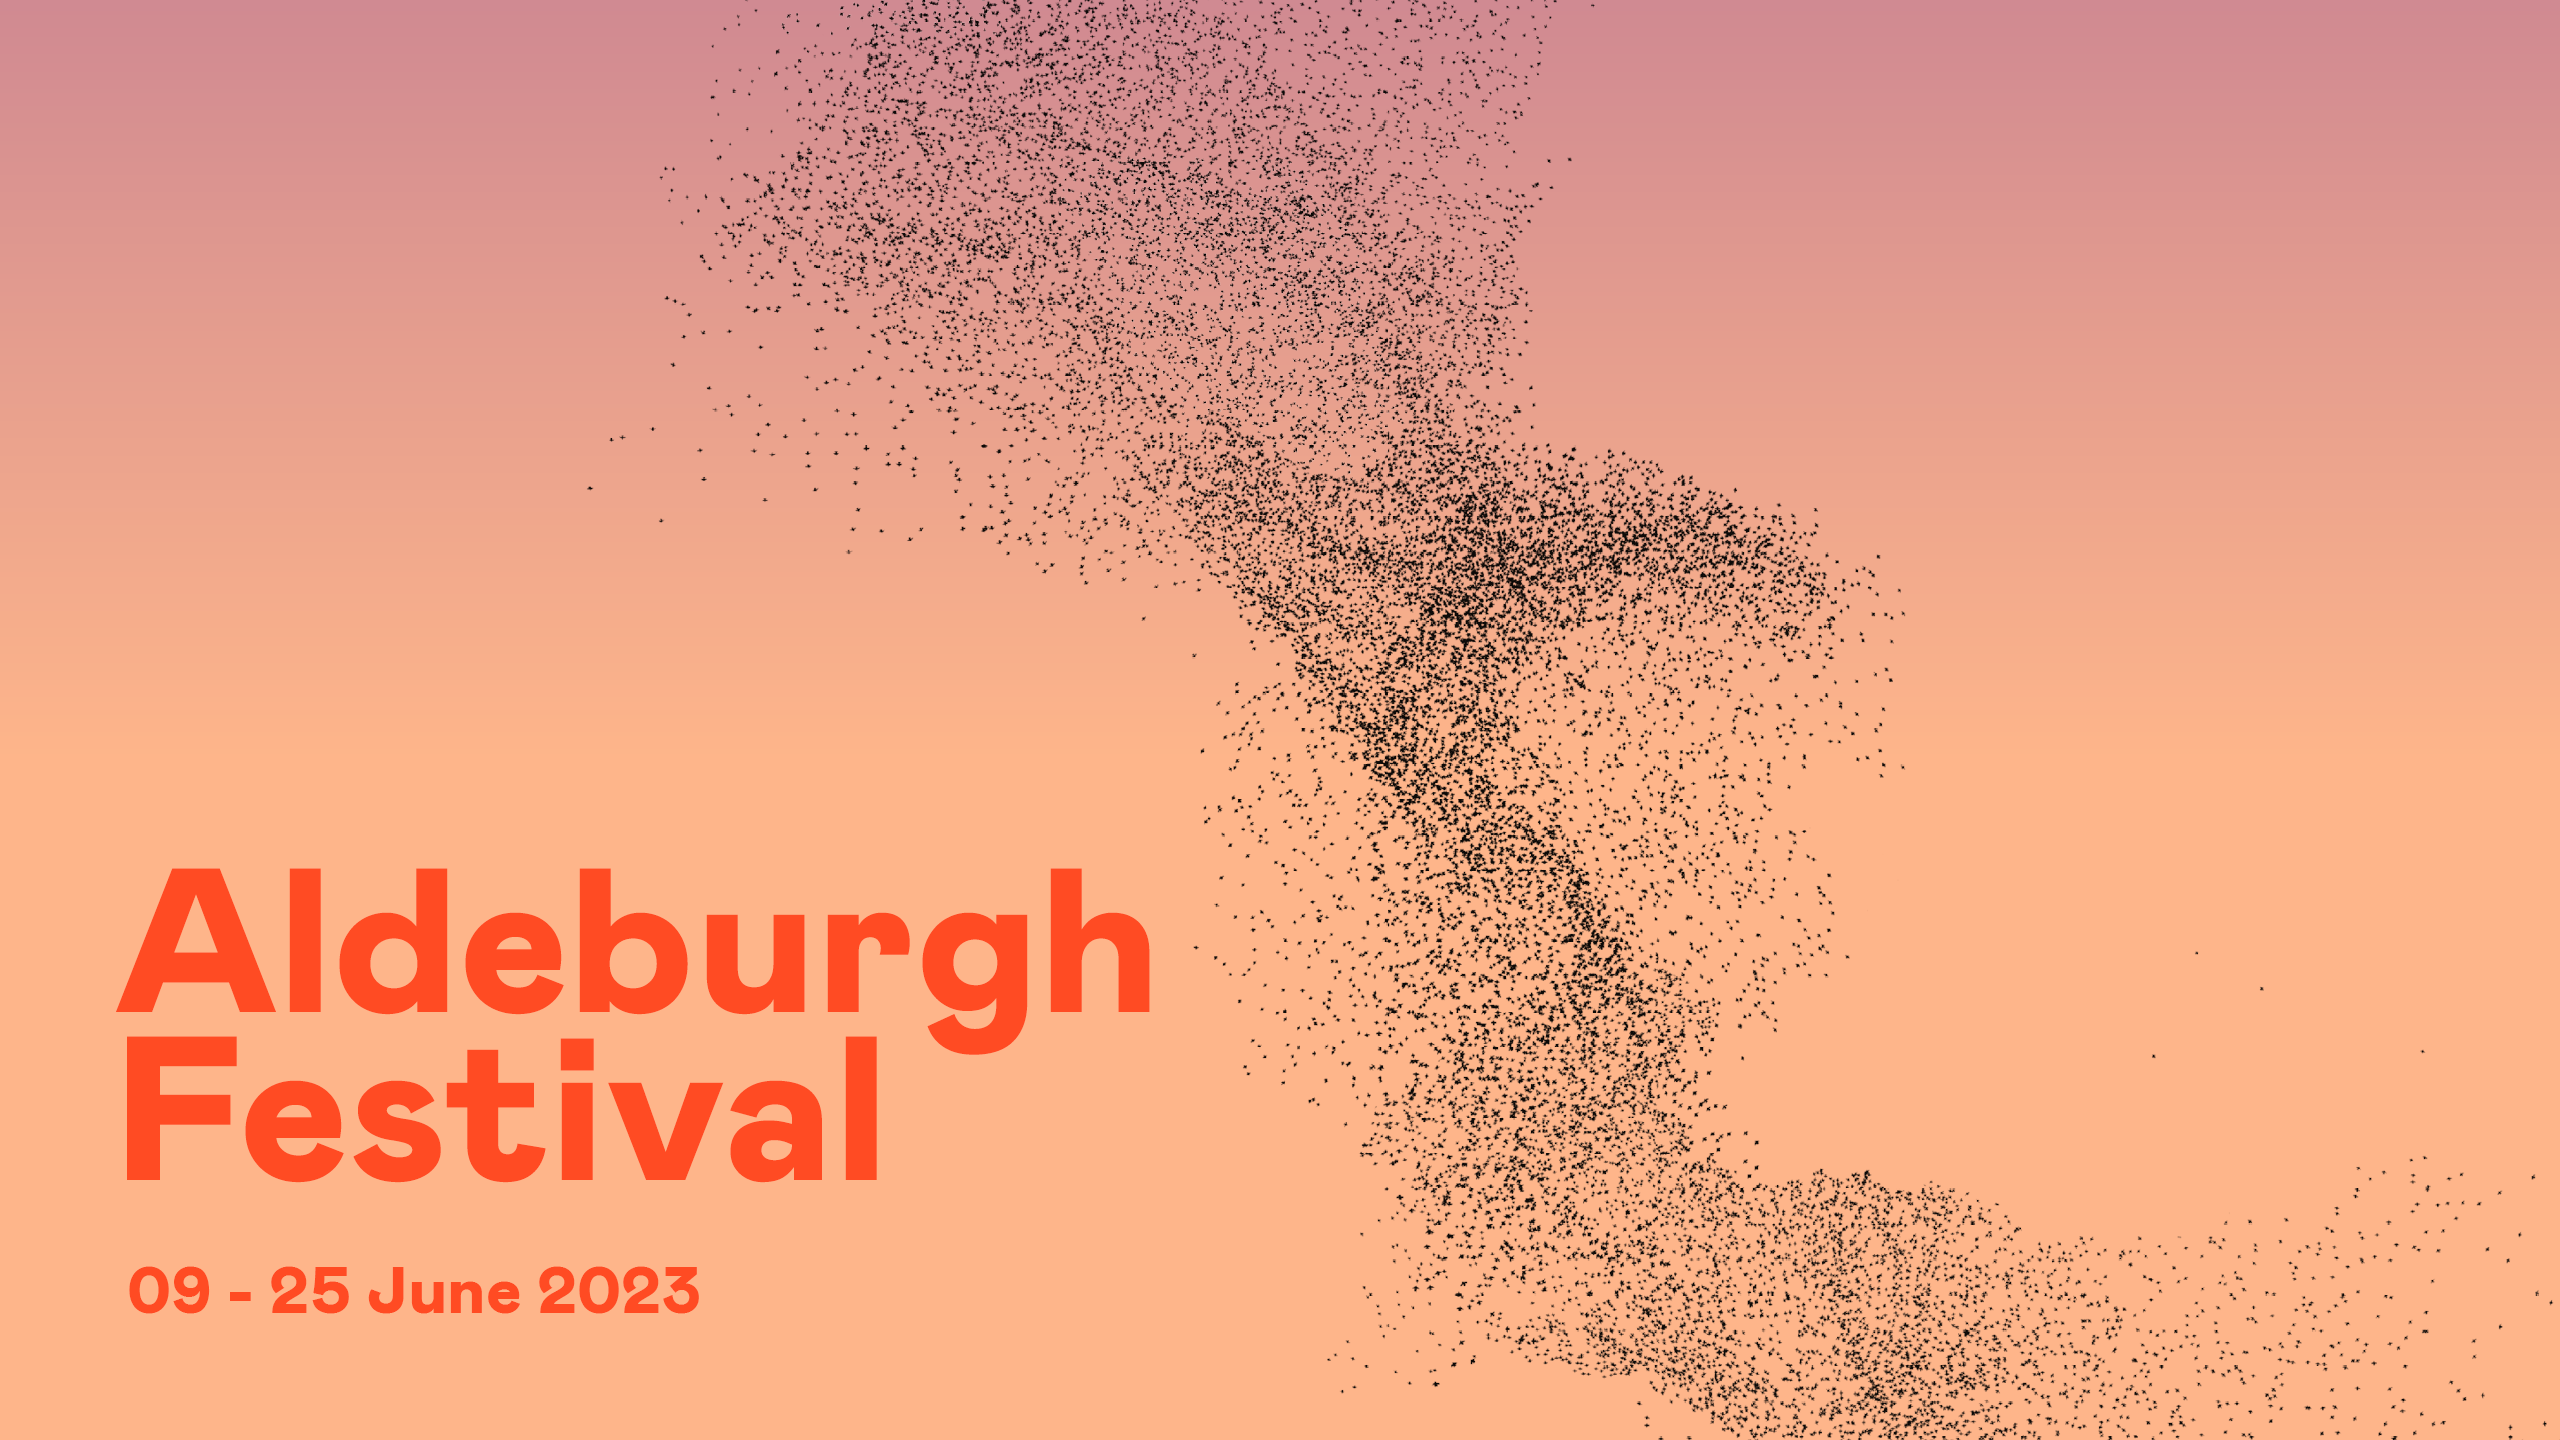 New commission for Aldeburgh Festival 2023